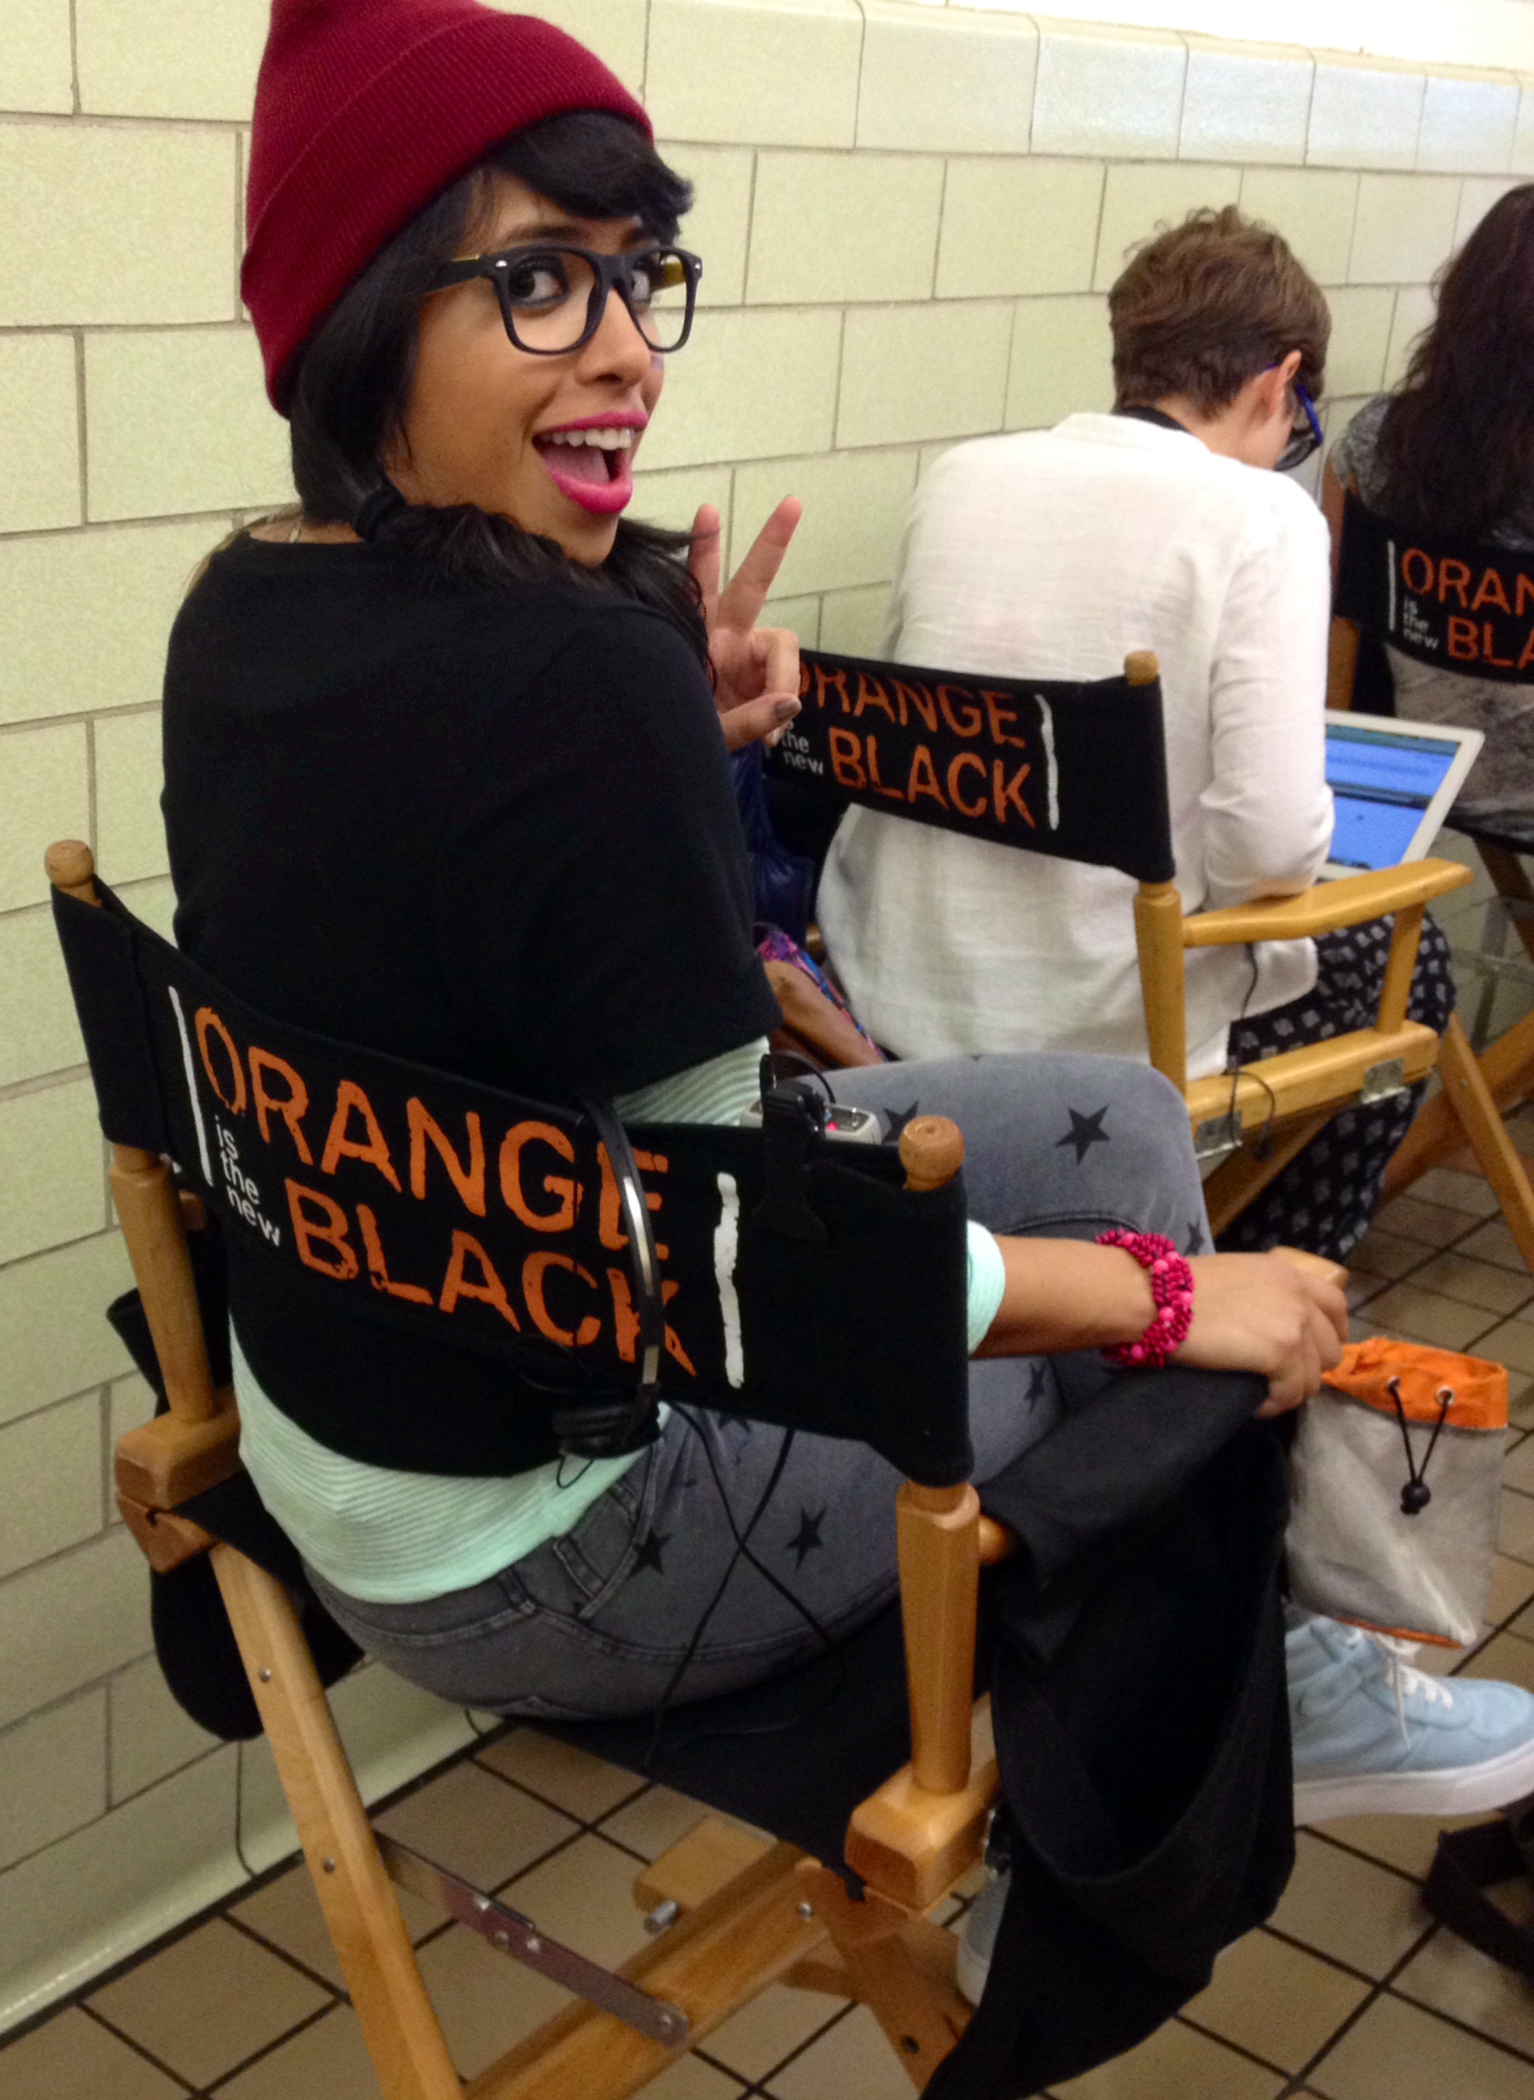 On set Orange is the New Black 2015